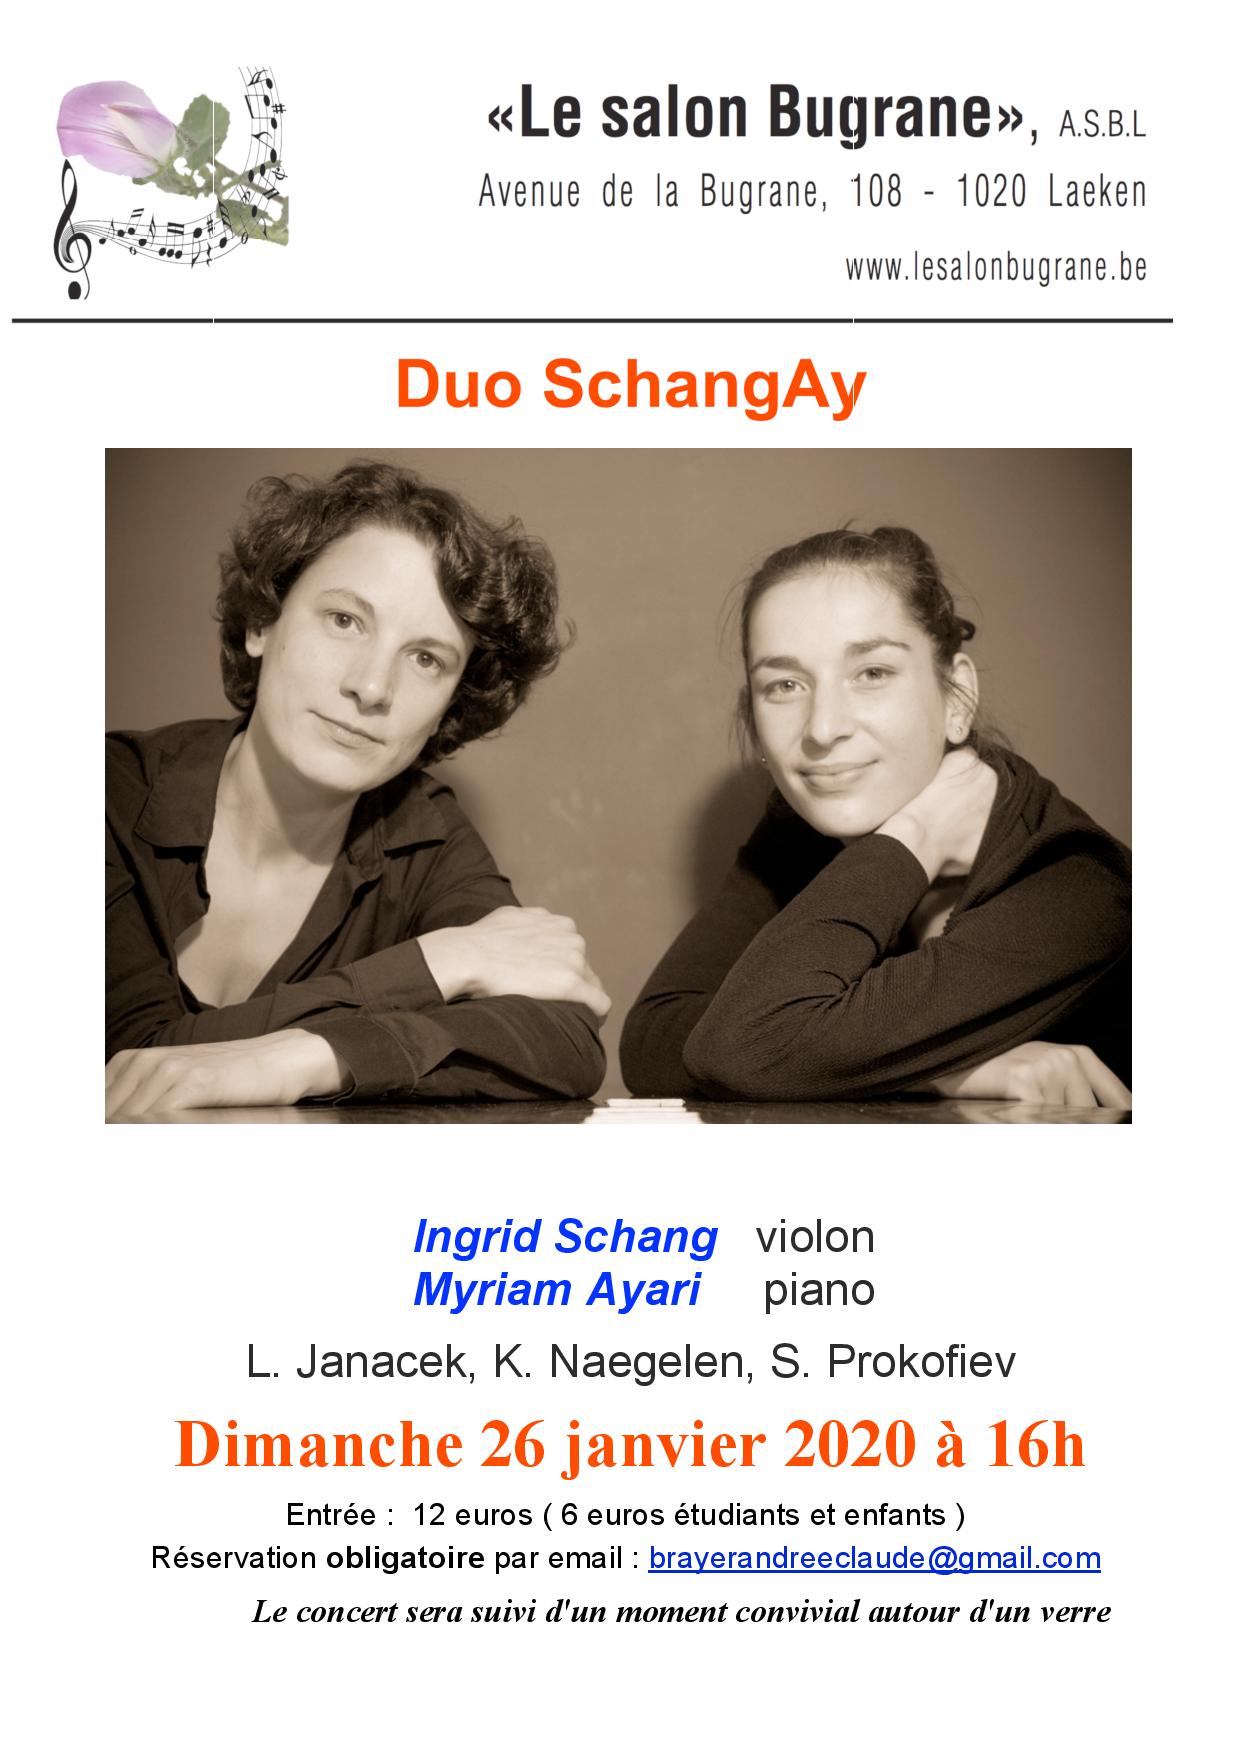 Dimanche 26/01 au Salon Bugrane : Duo SchangAy